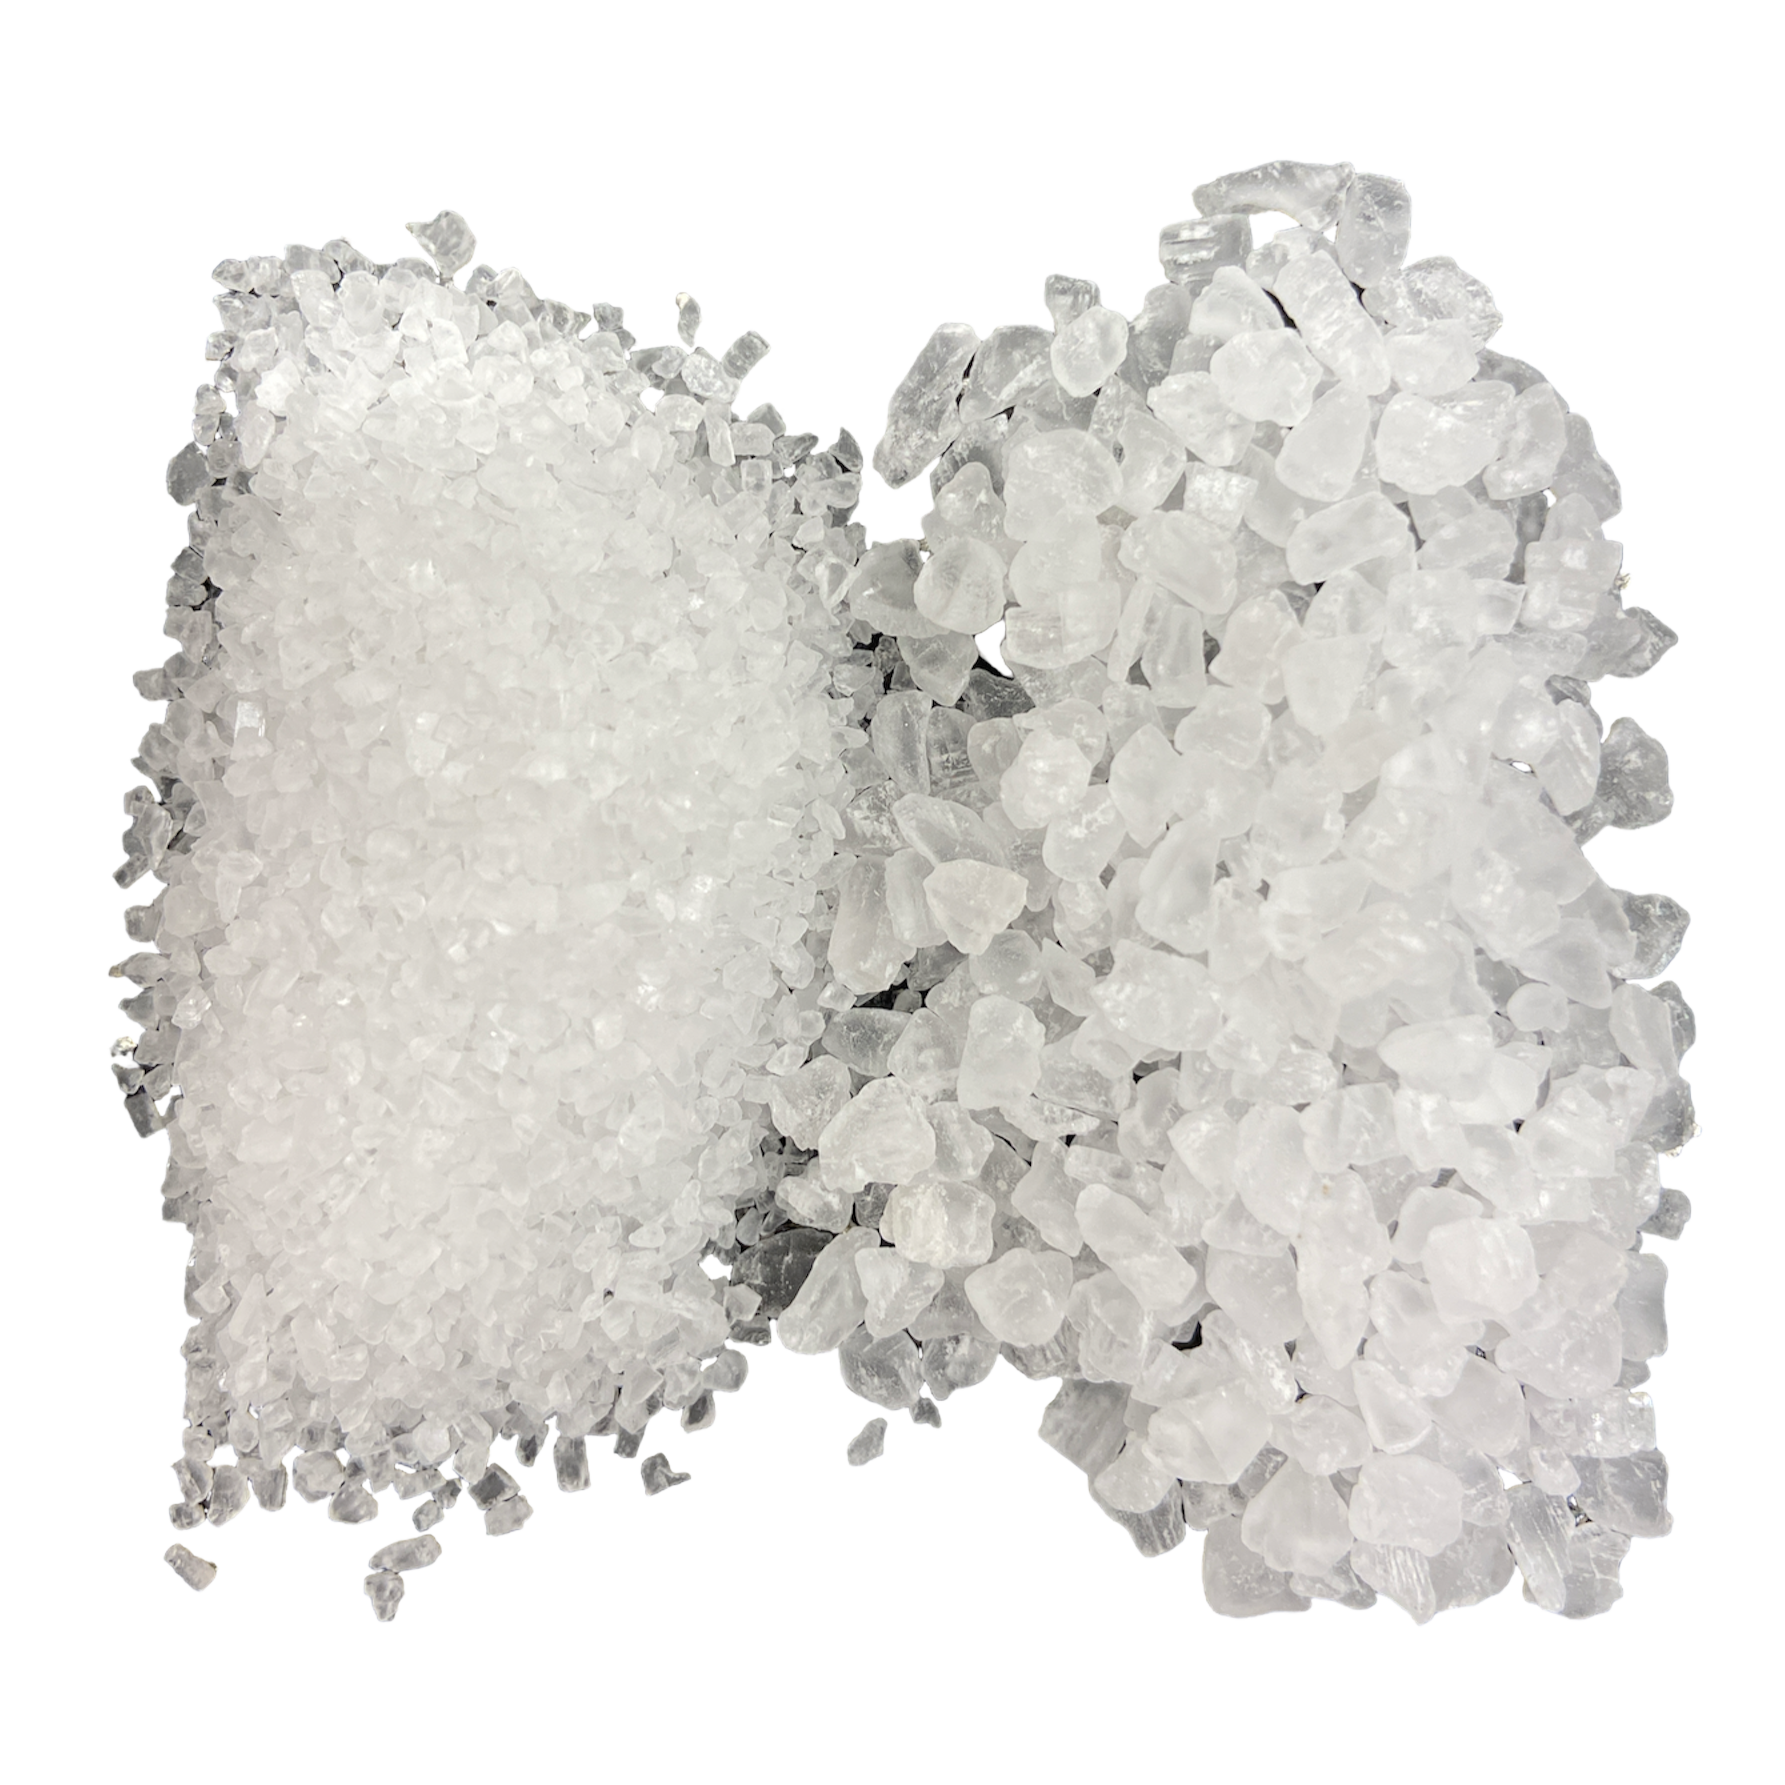 Pure Ocean Sea Salt Coarse and Fine grains